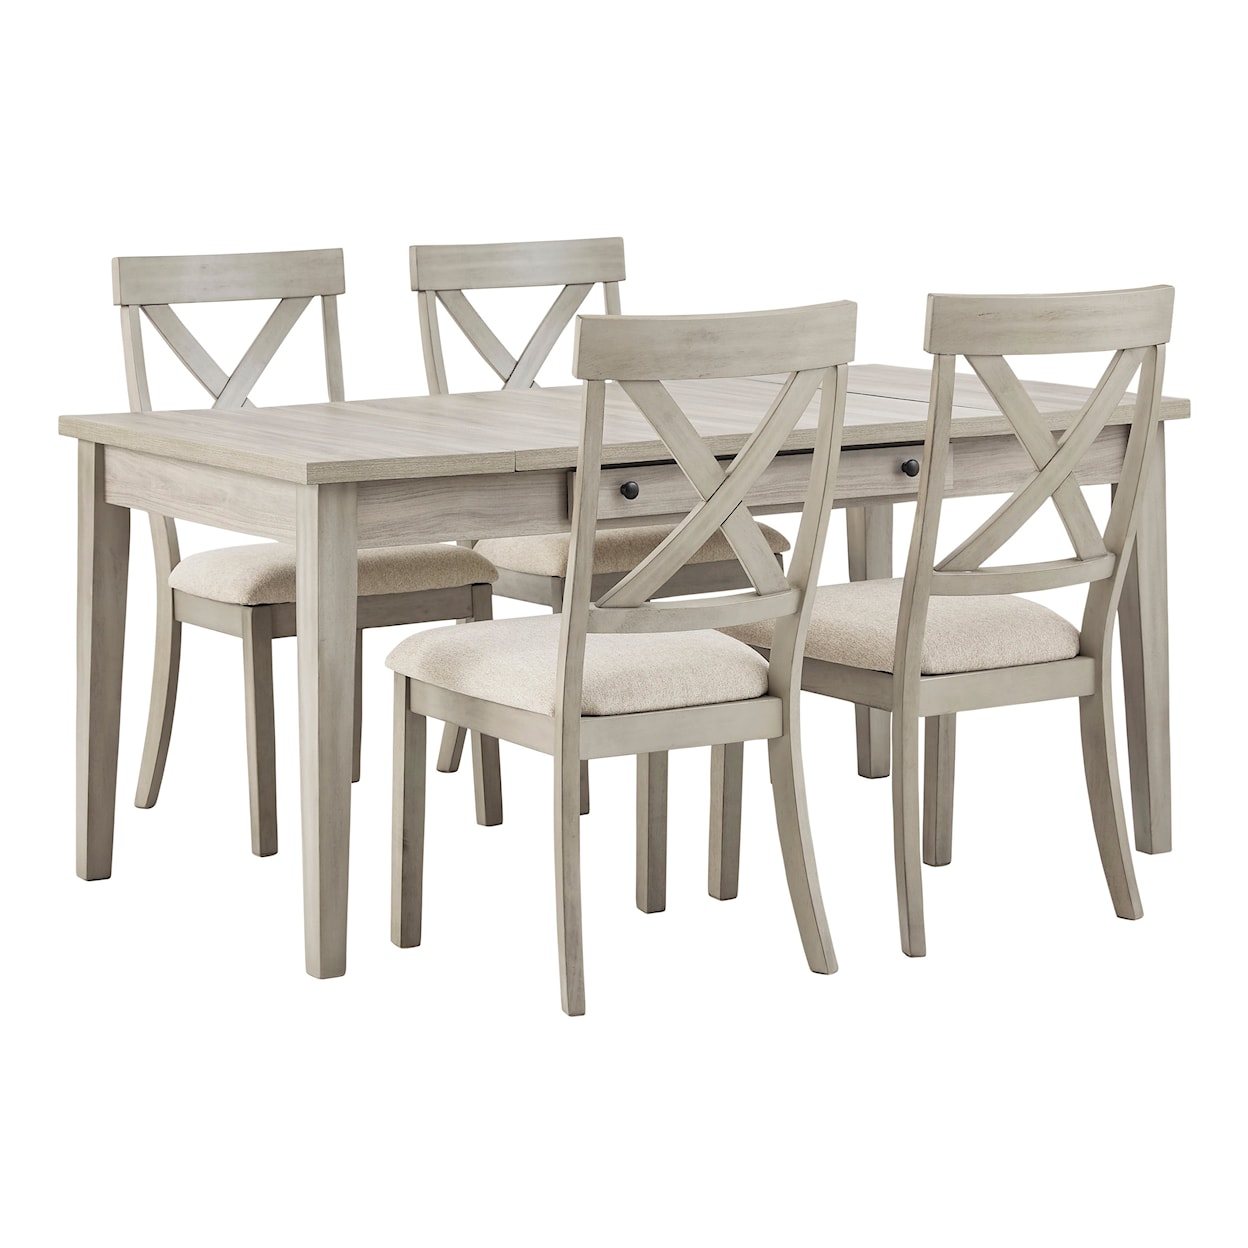 Signature Design by Ashley Parellen 5-Piece Table and Chair Set